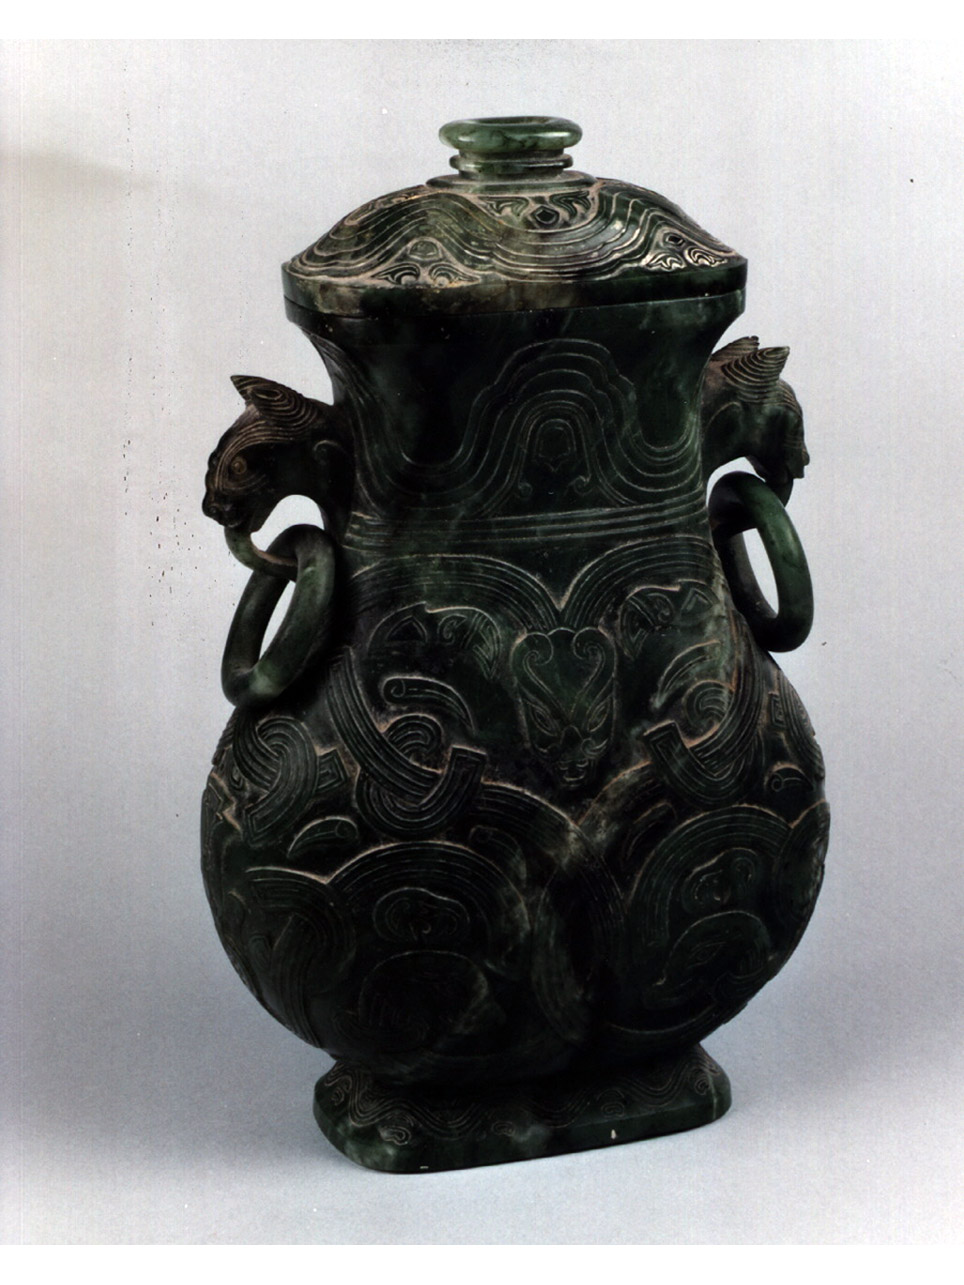 motivi decorativi vegetali e animali (vaso) - manifattura cinese (sec. XVIII)